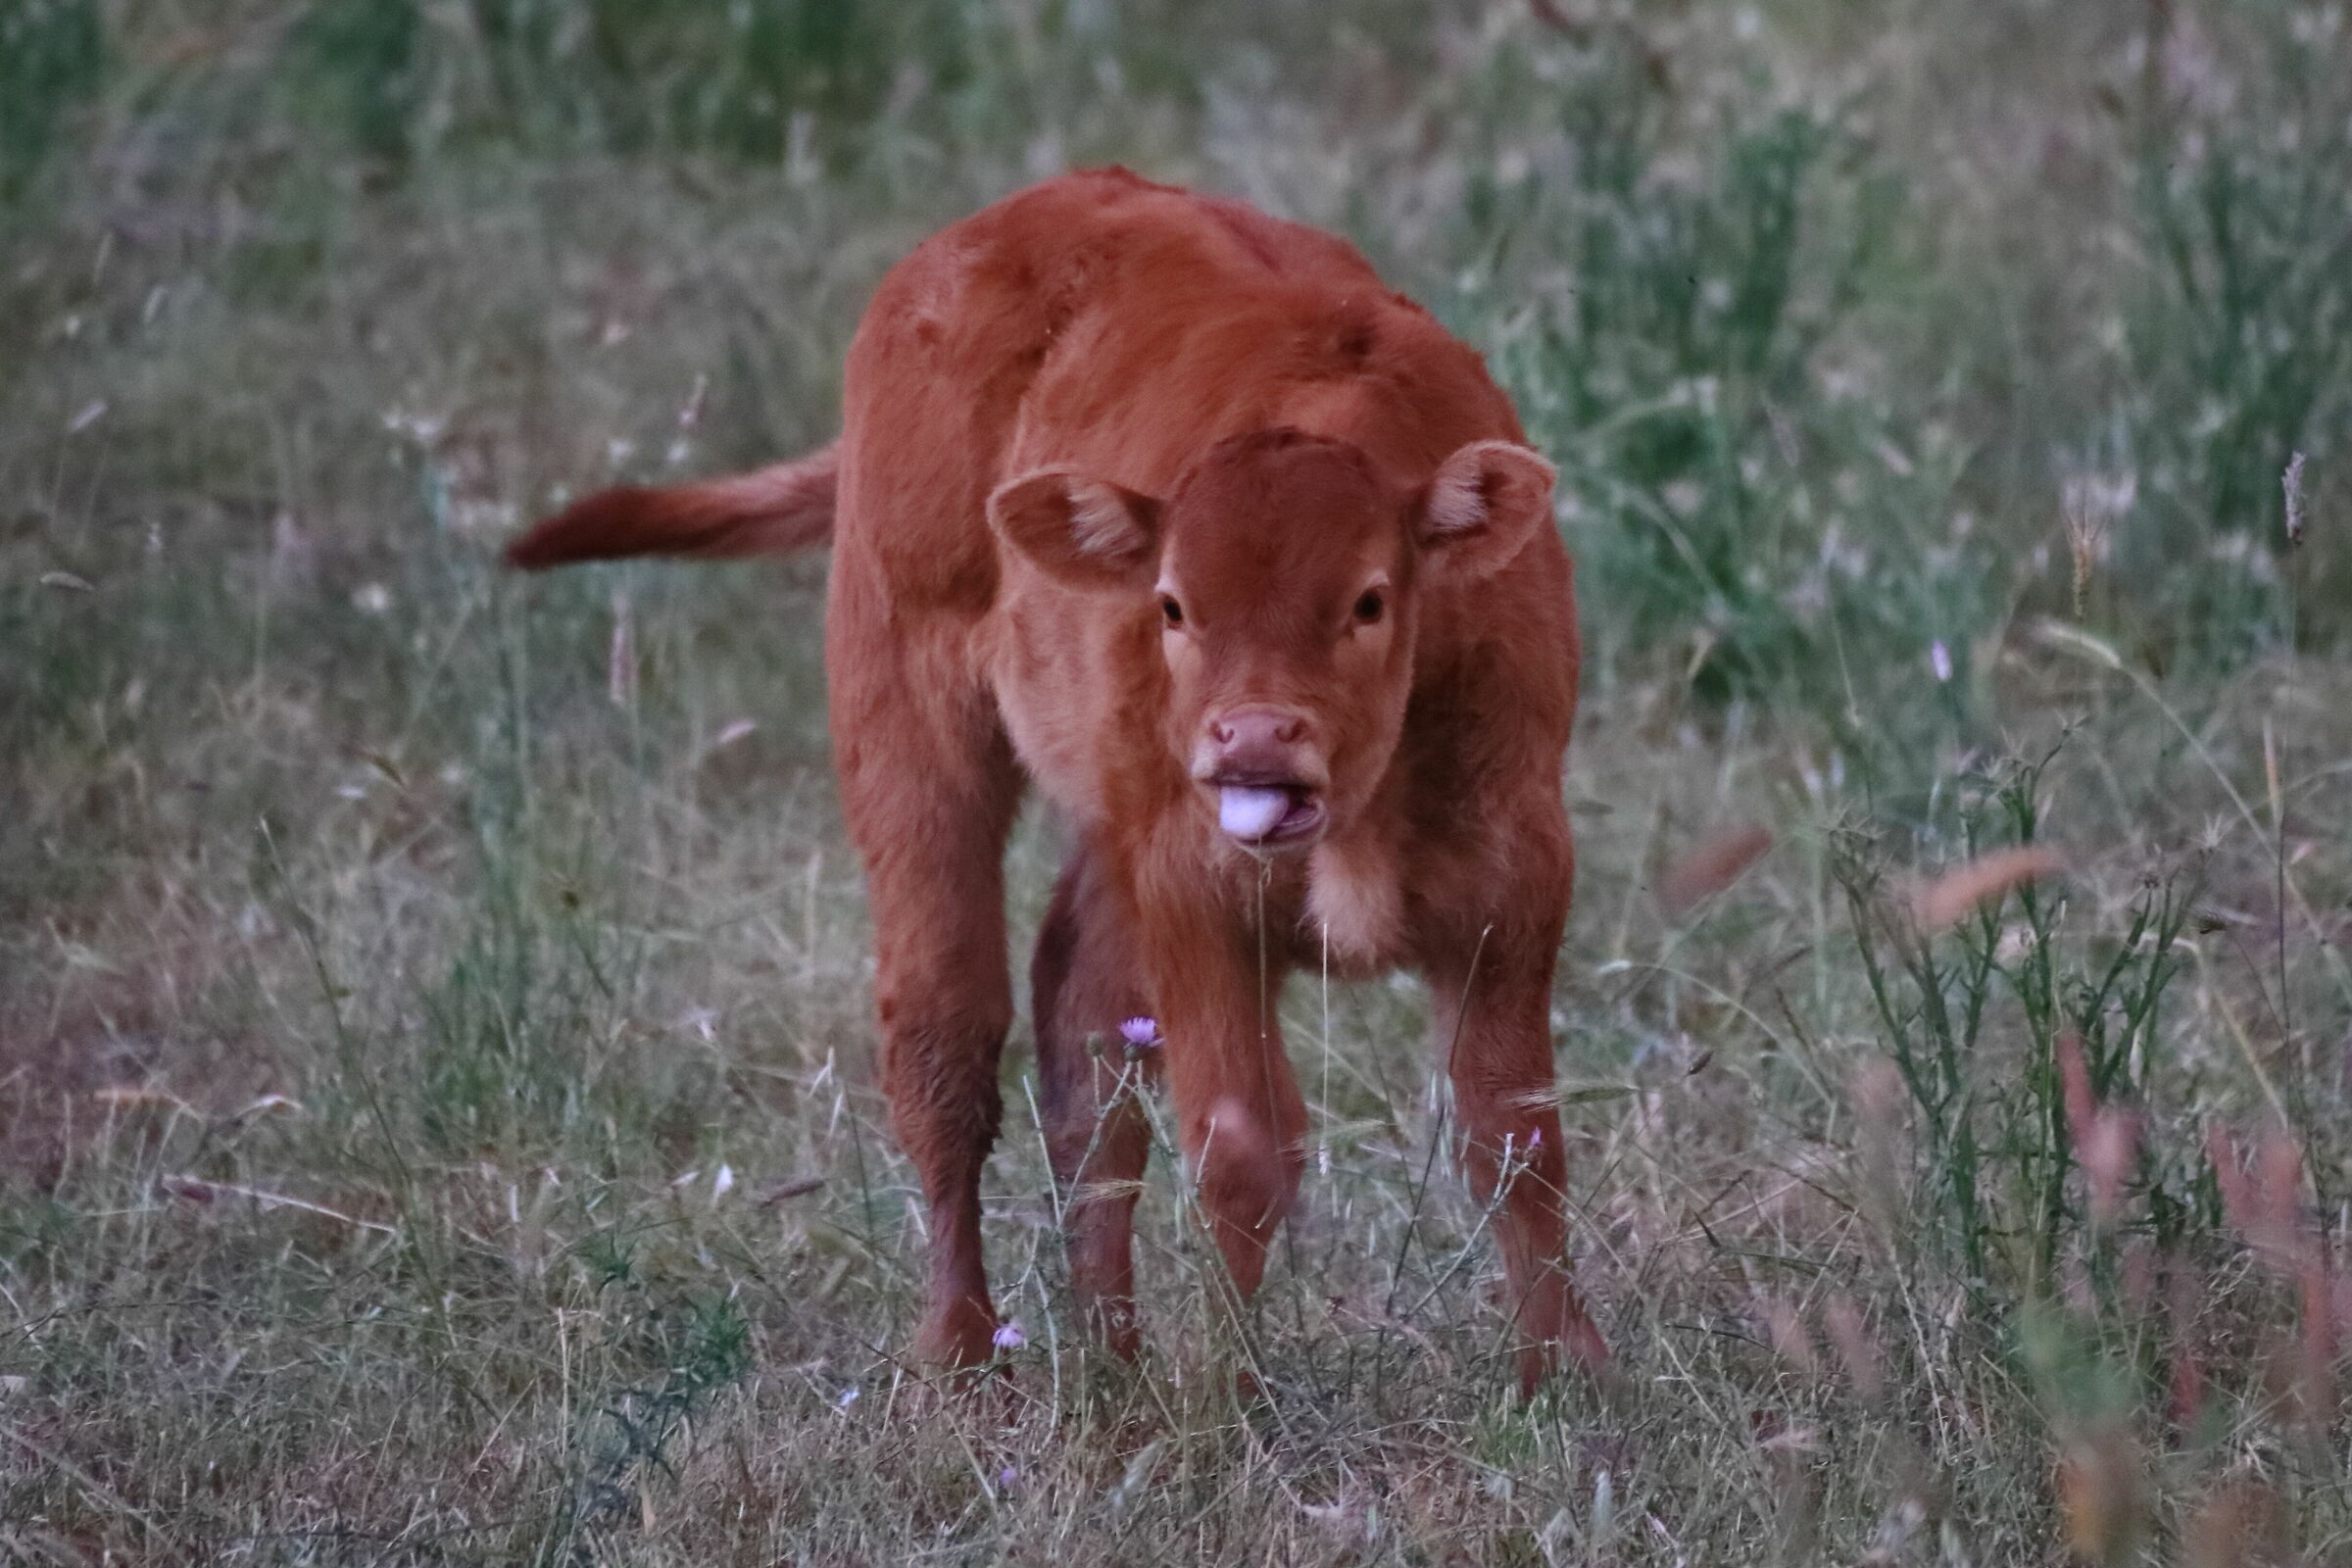 the calf makes the tongue...